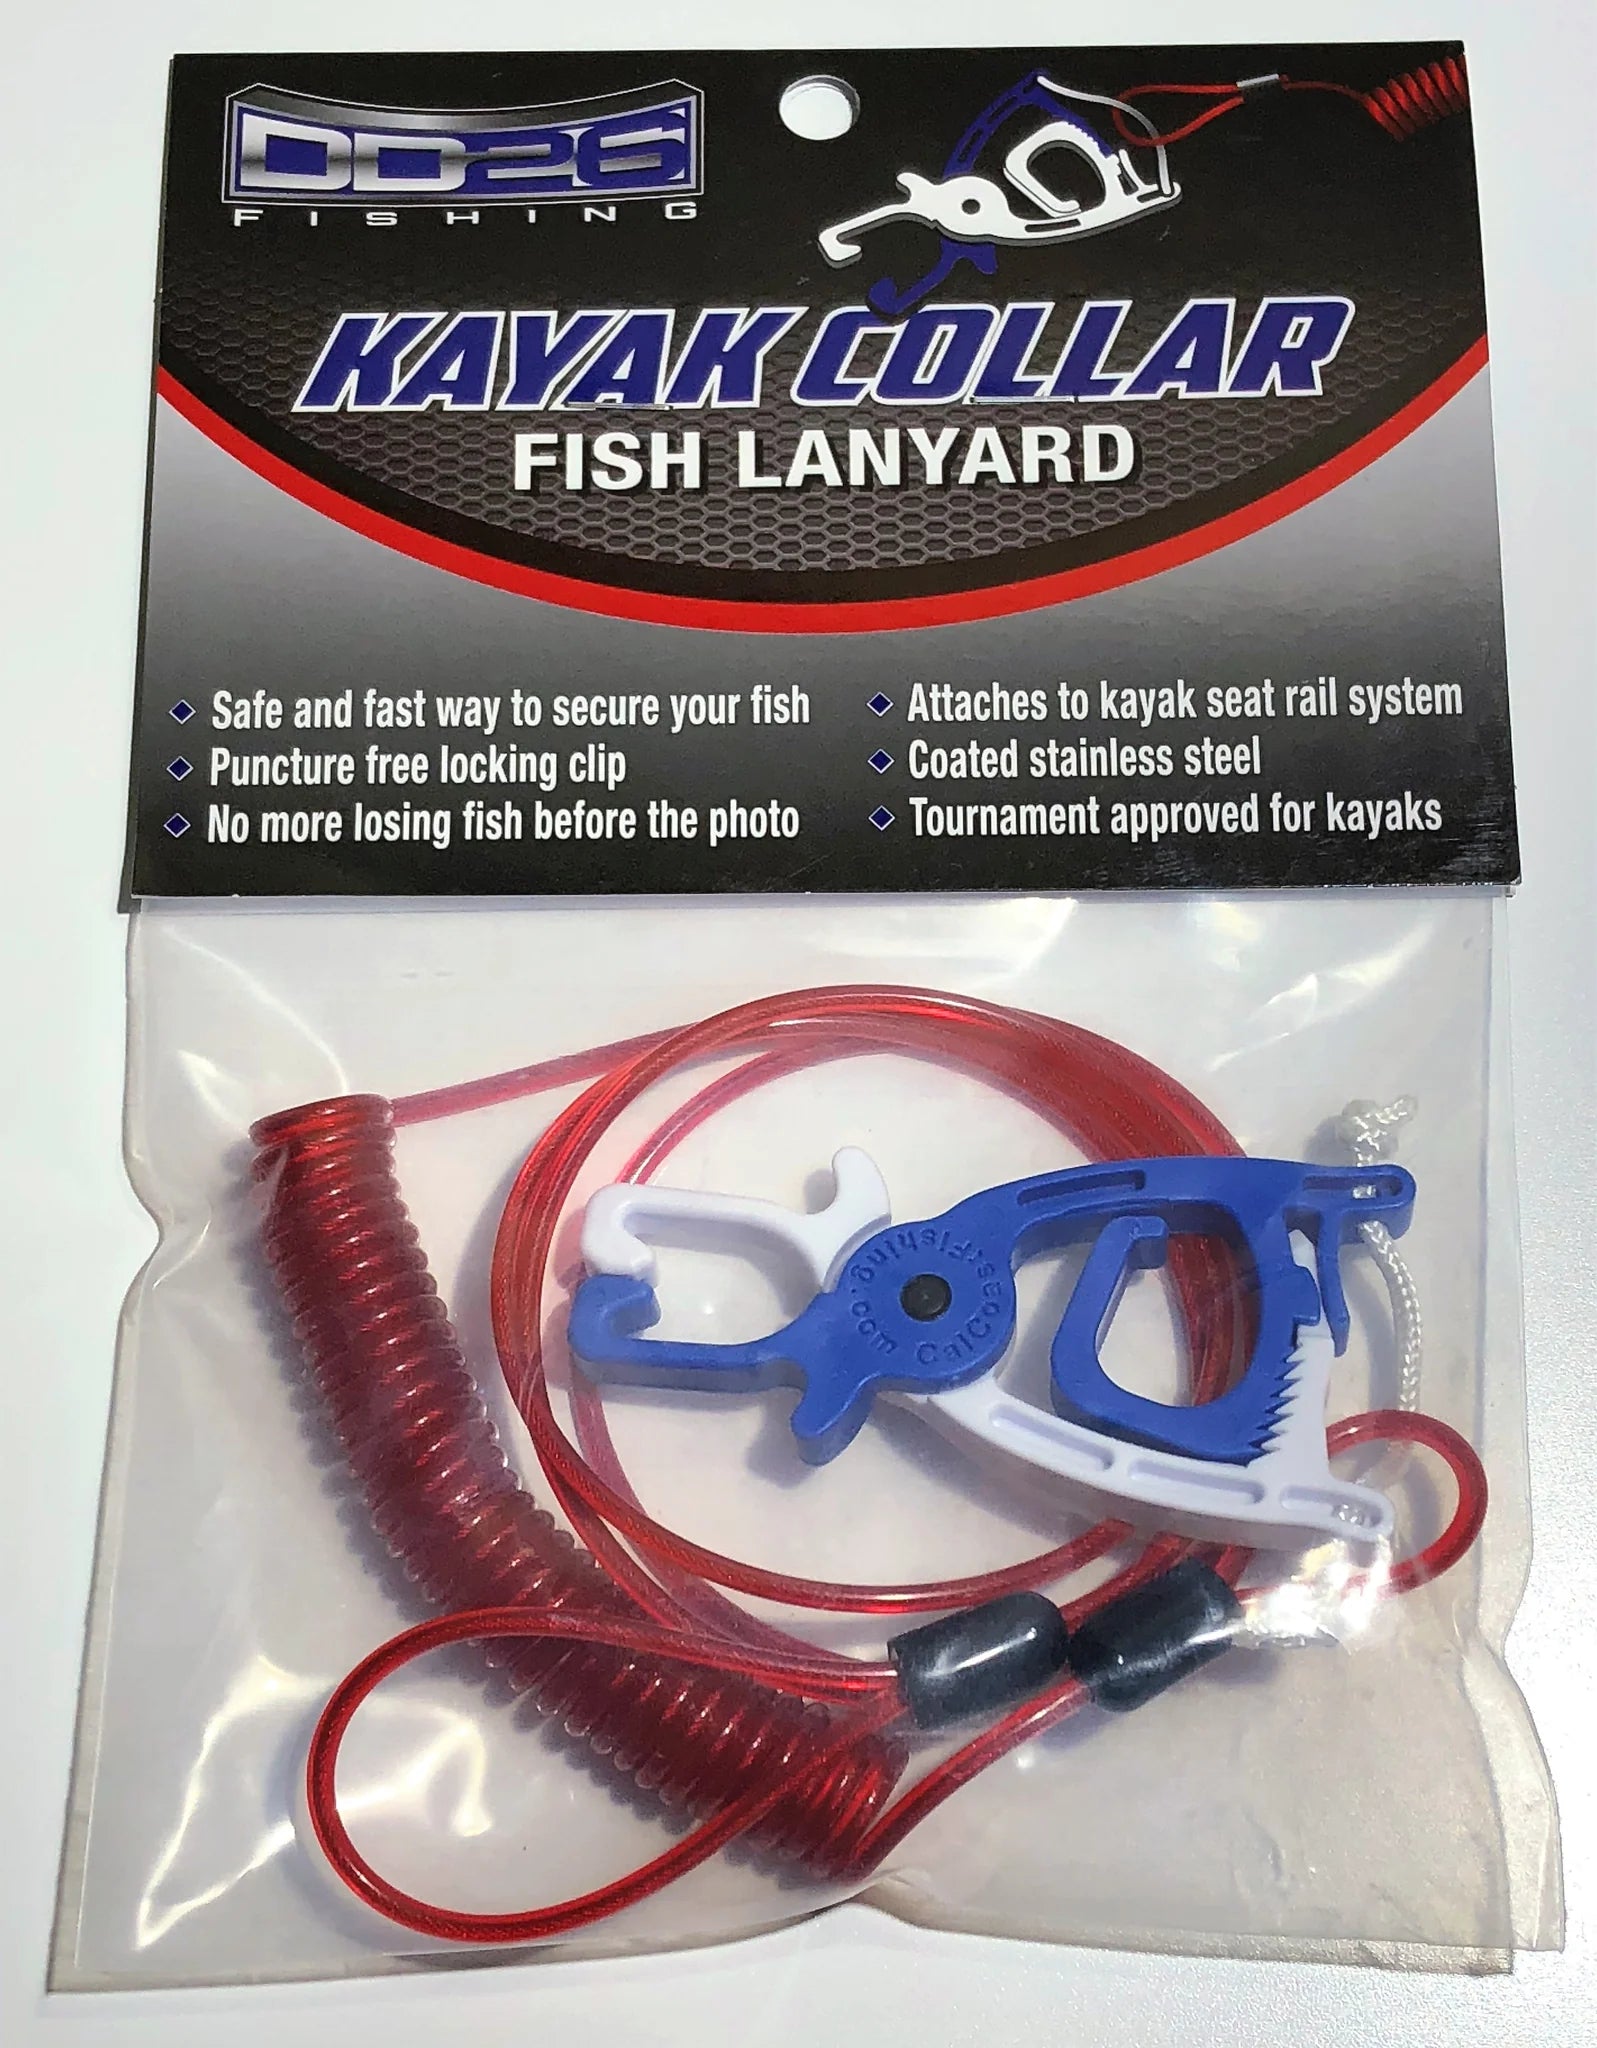 DD26 KAYAK COLLAR FISH LANYARD - 0